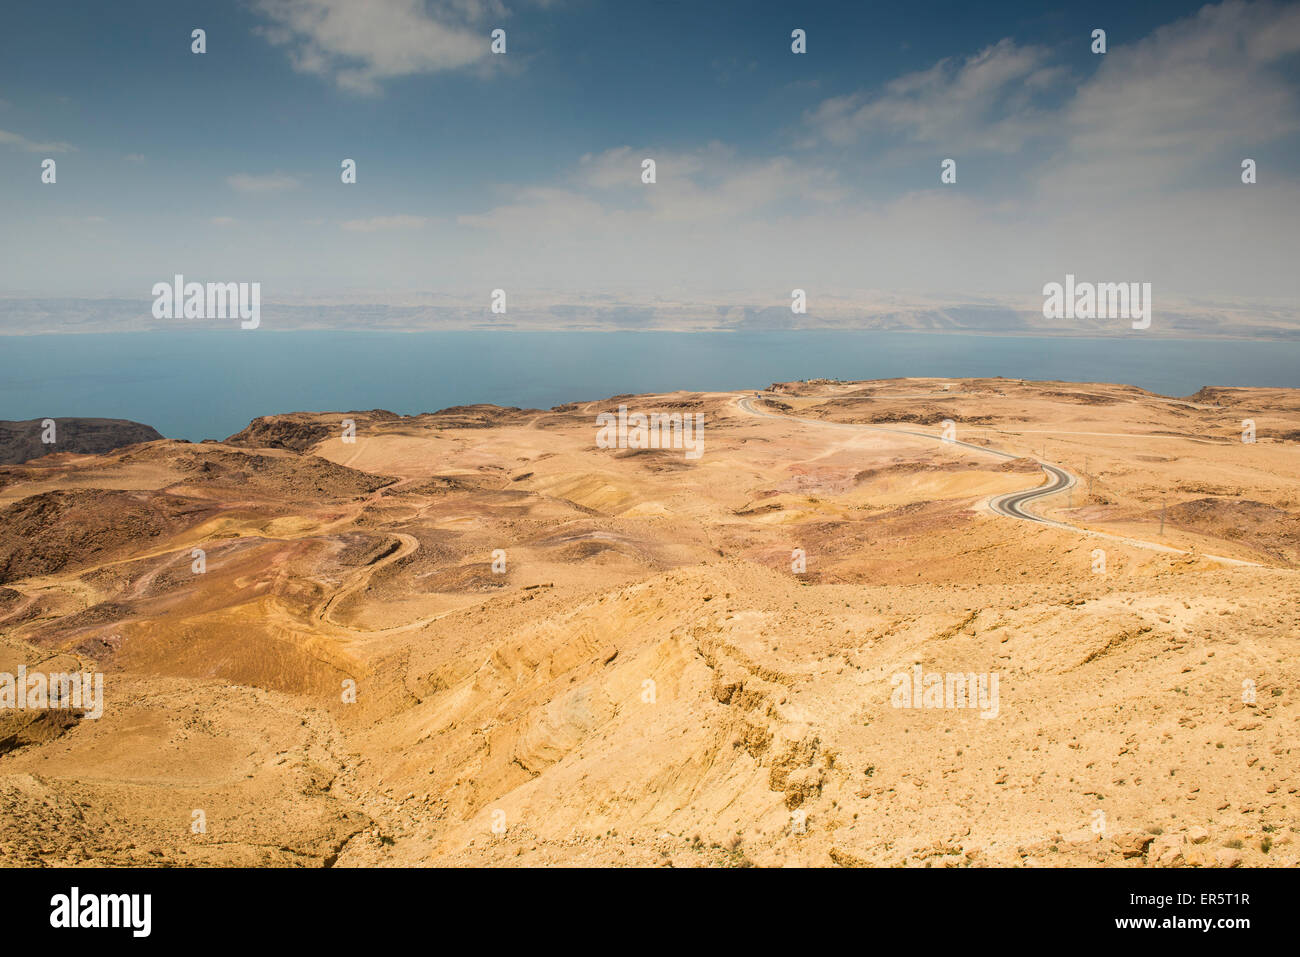 Highway 65 Dead Sea Highway, Dead Sea and Israel coast in background, Jordan, Middle East Stock Photo